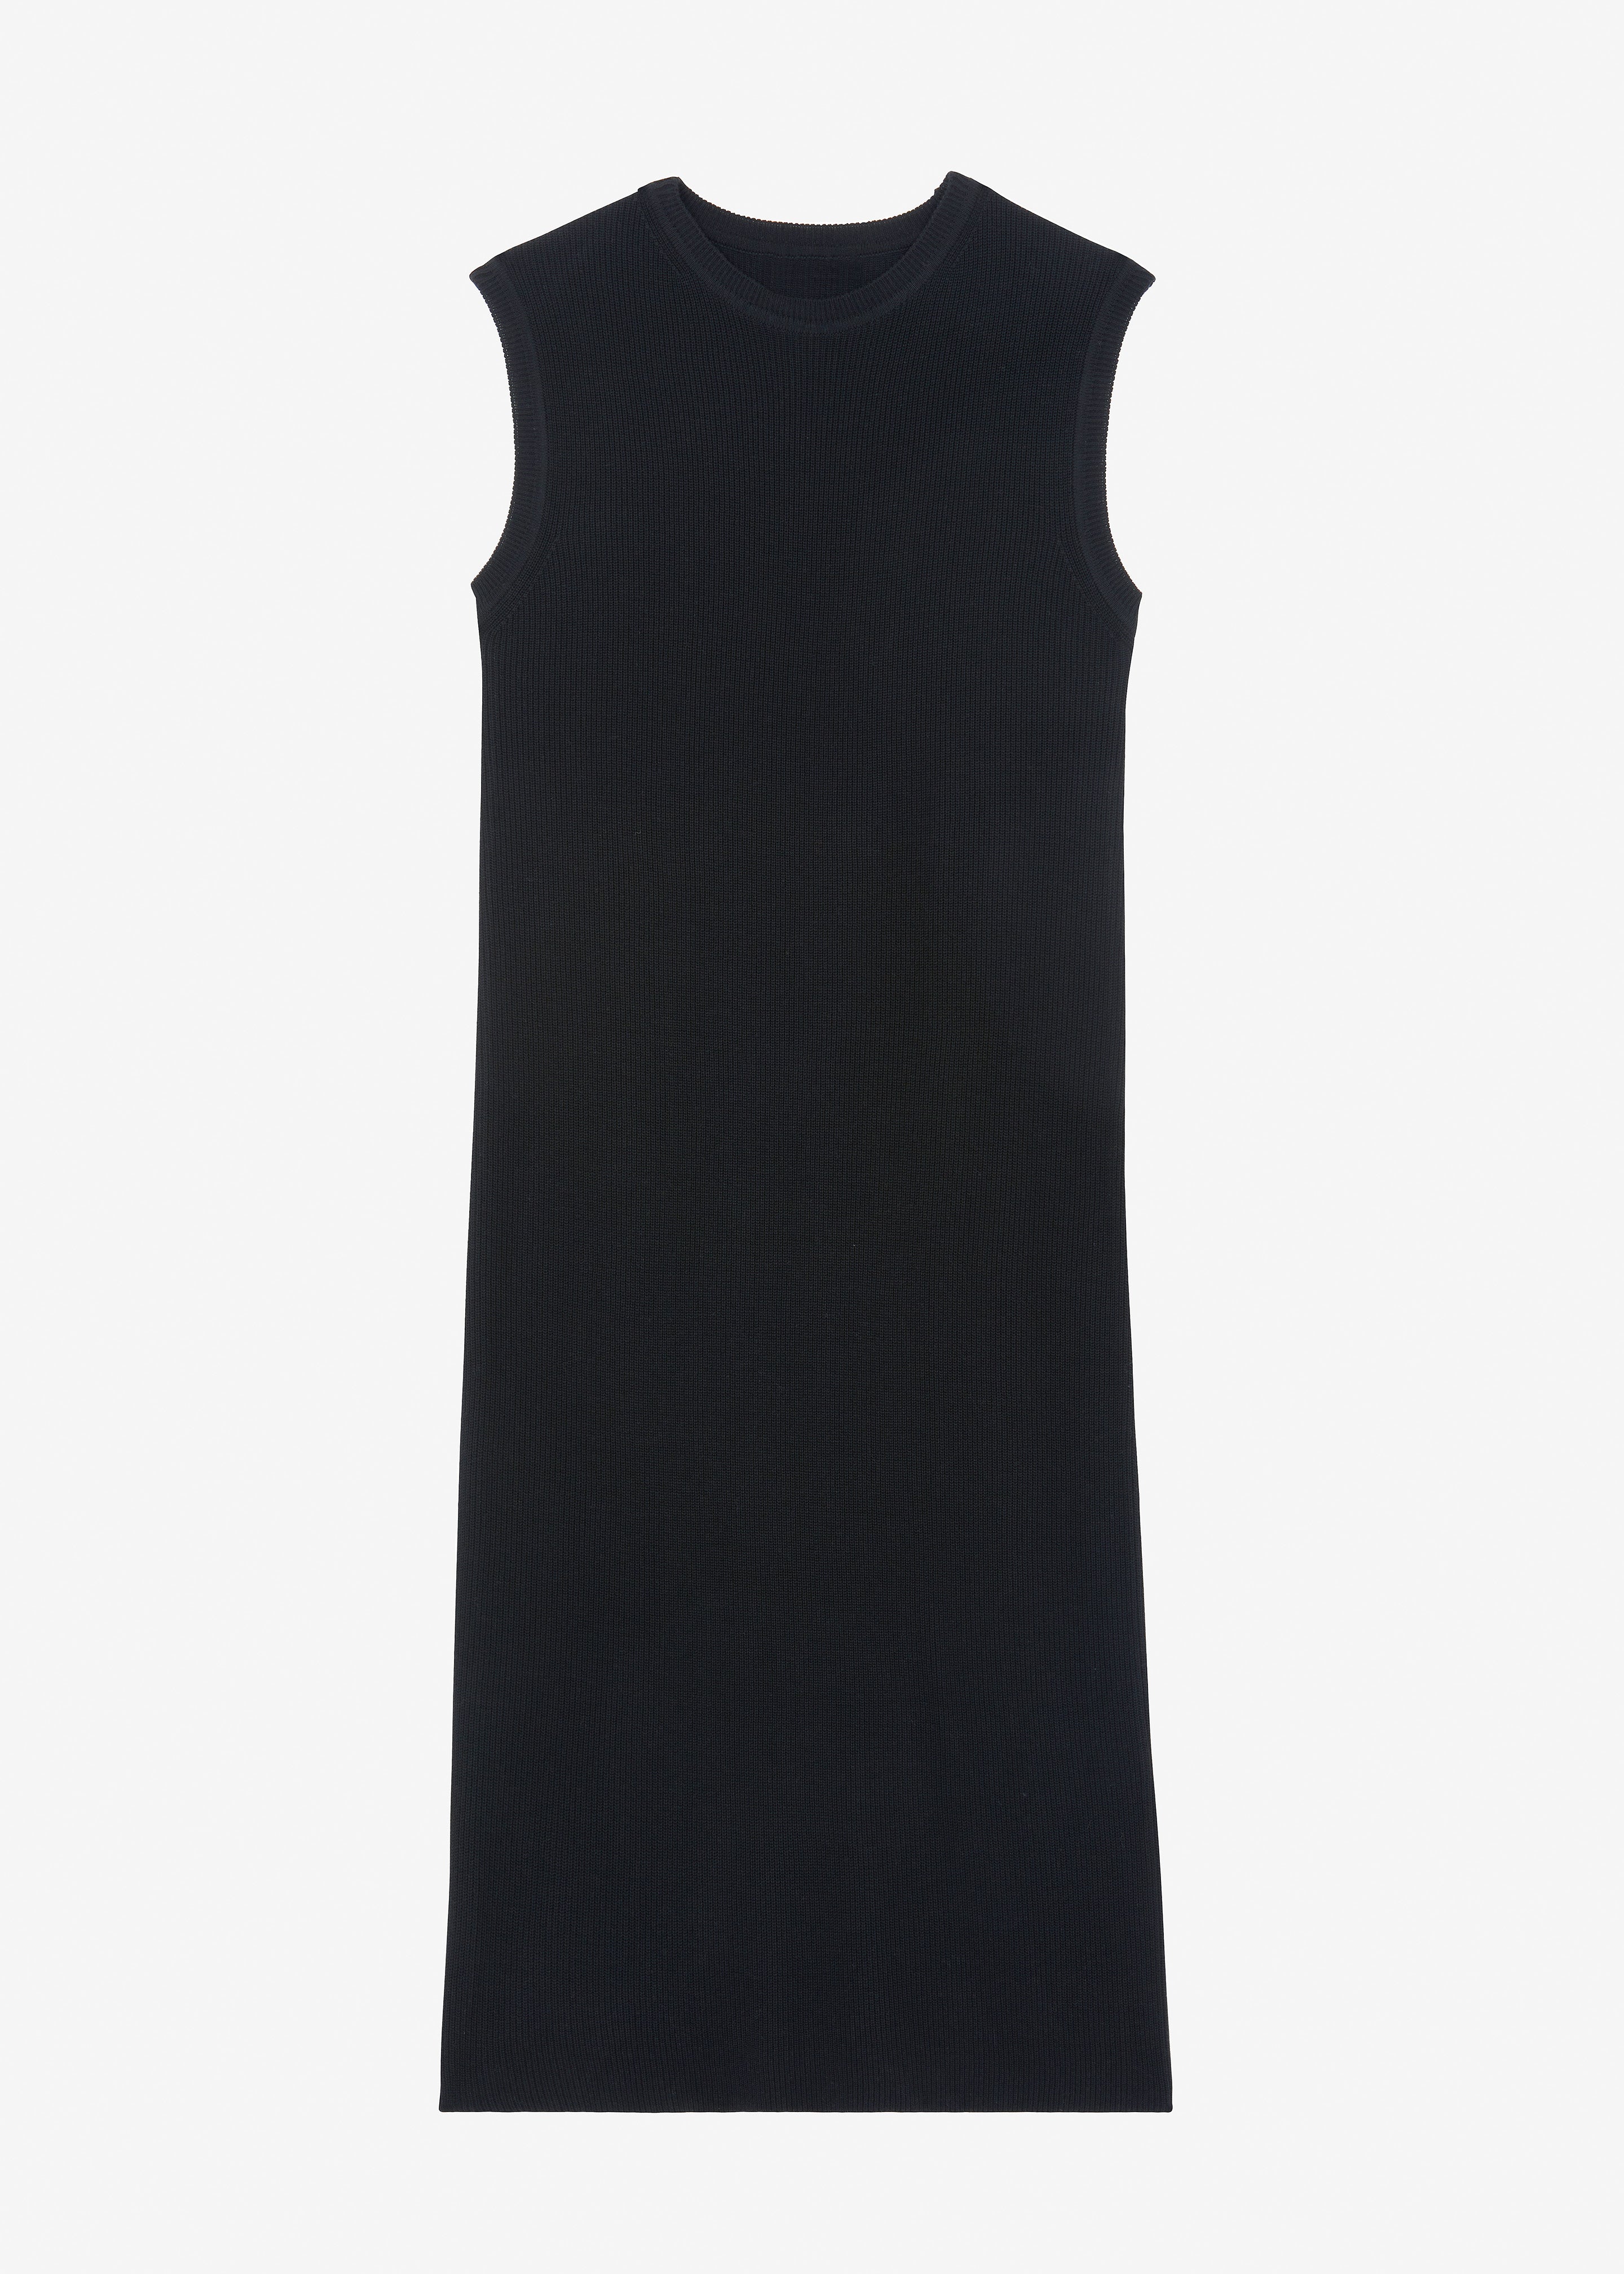 Rosie Knit Dress - Black - 6